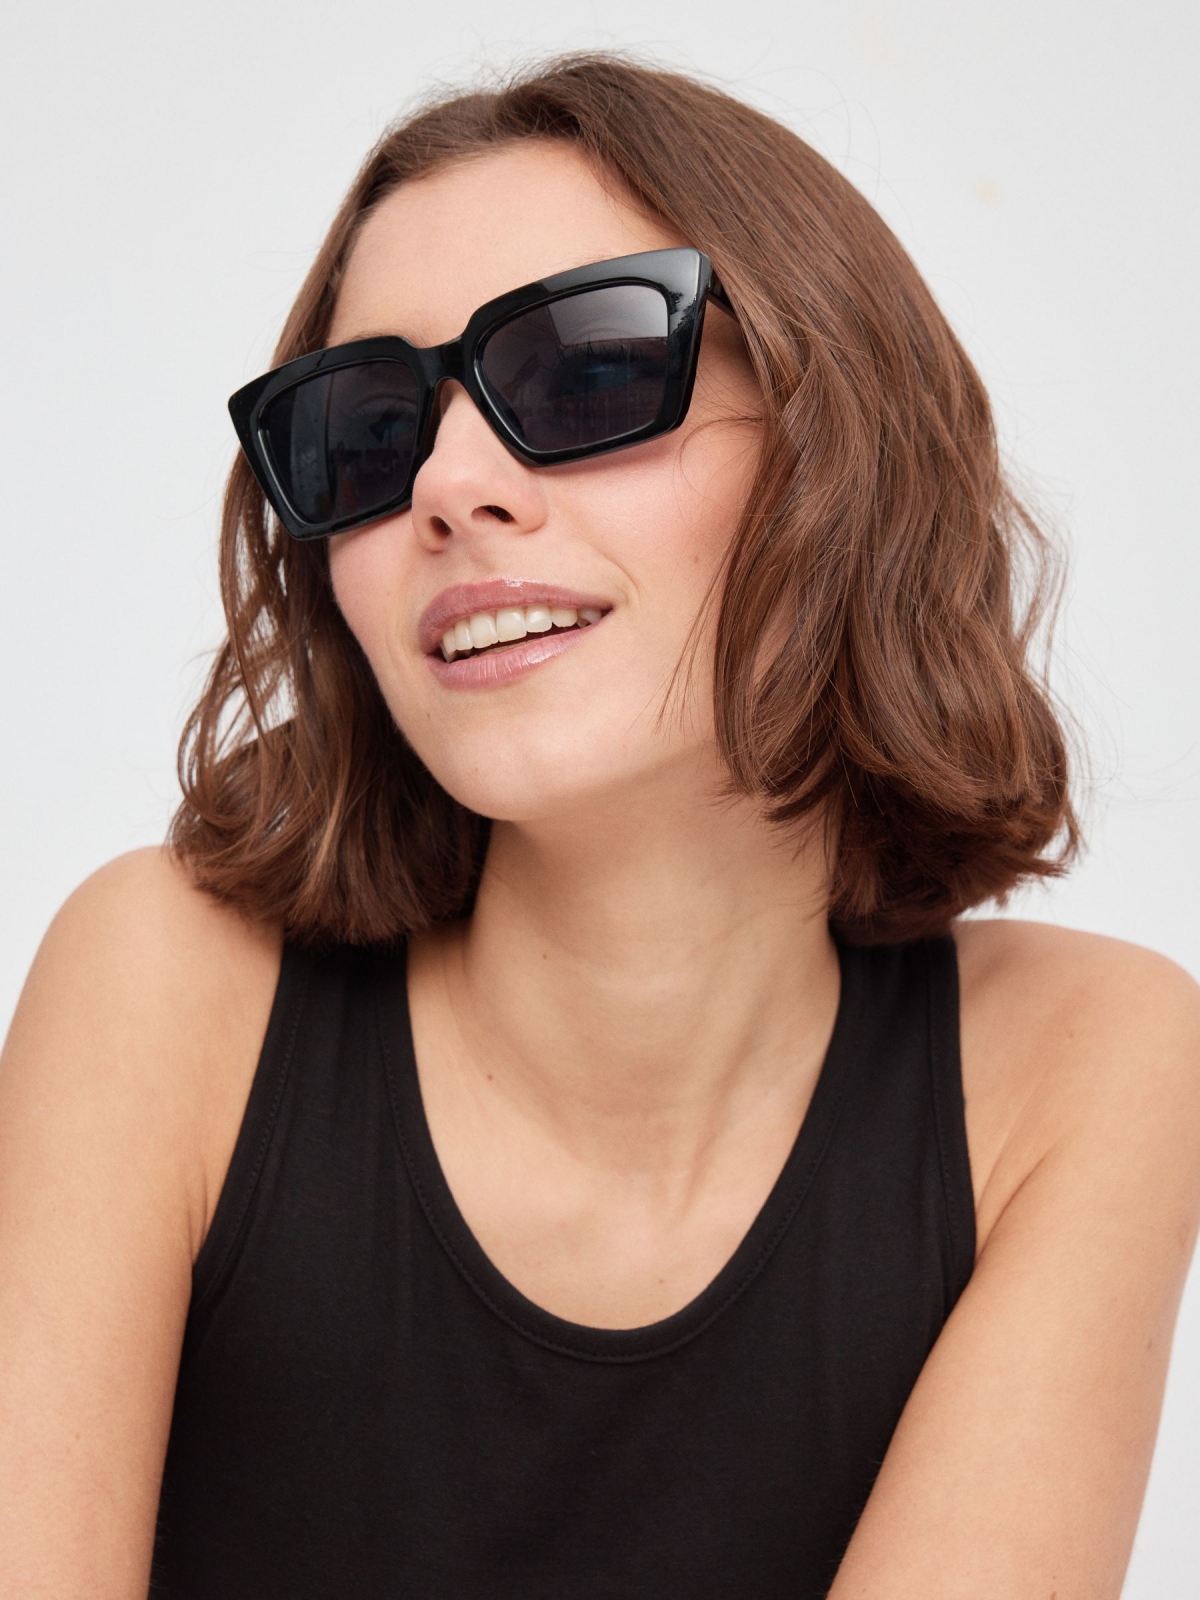 Square sunglasses black with a model